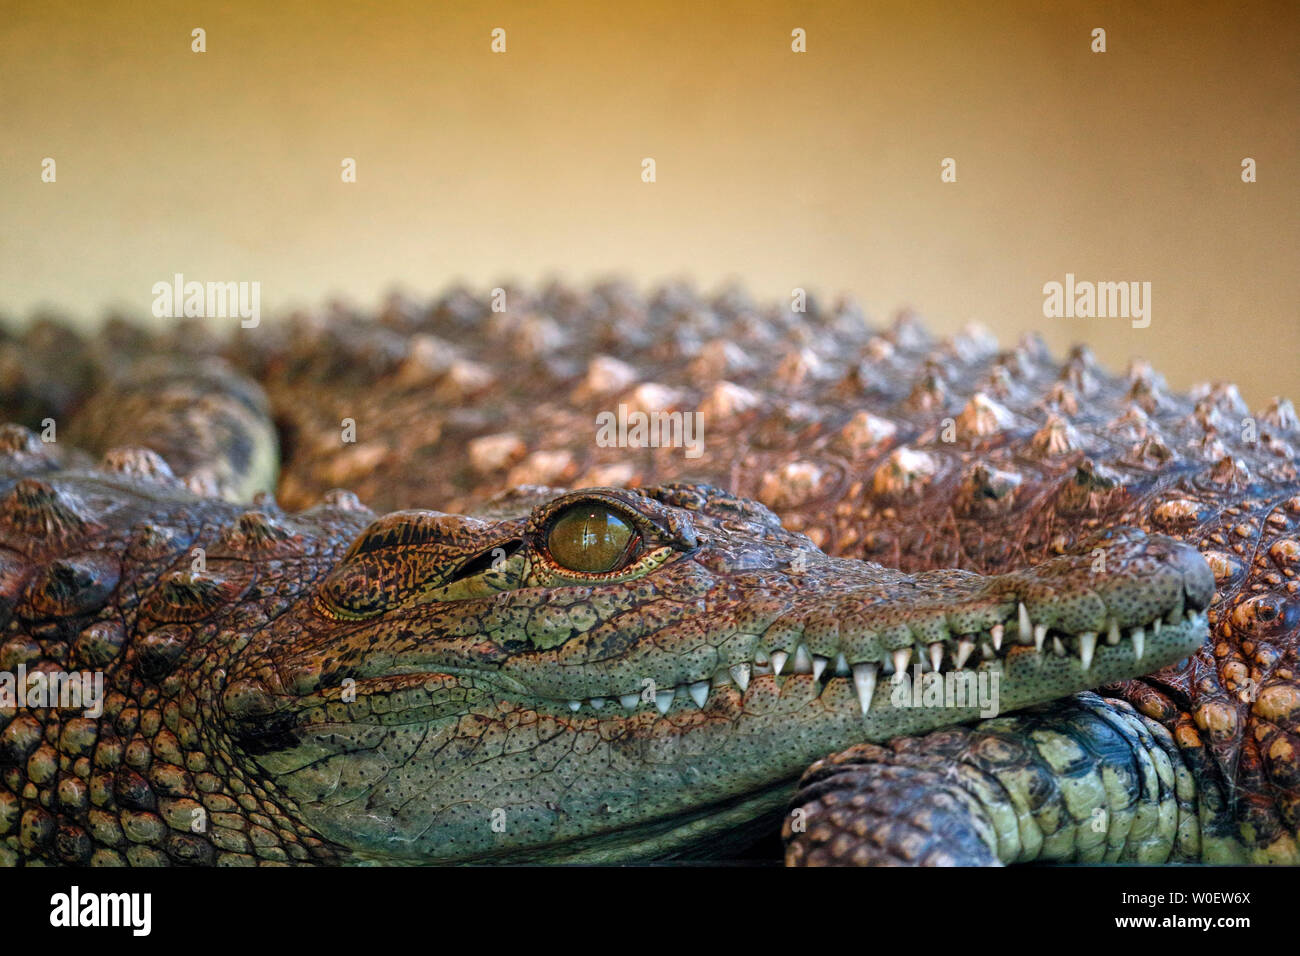 Close-up of the jaws of a Nile crocodile (crocodylus niloticus). Stock Photo